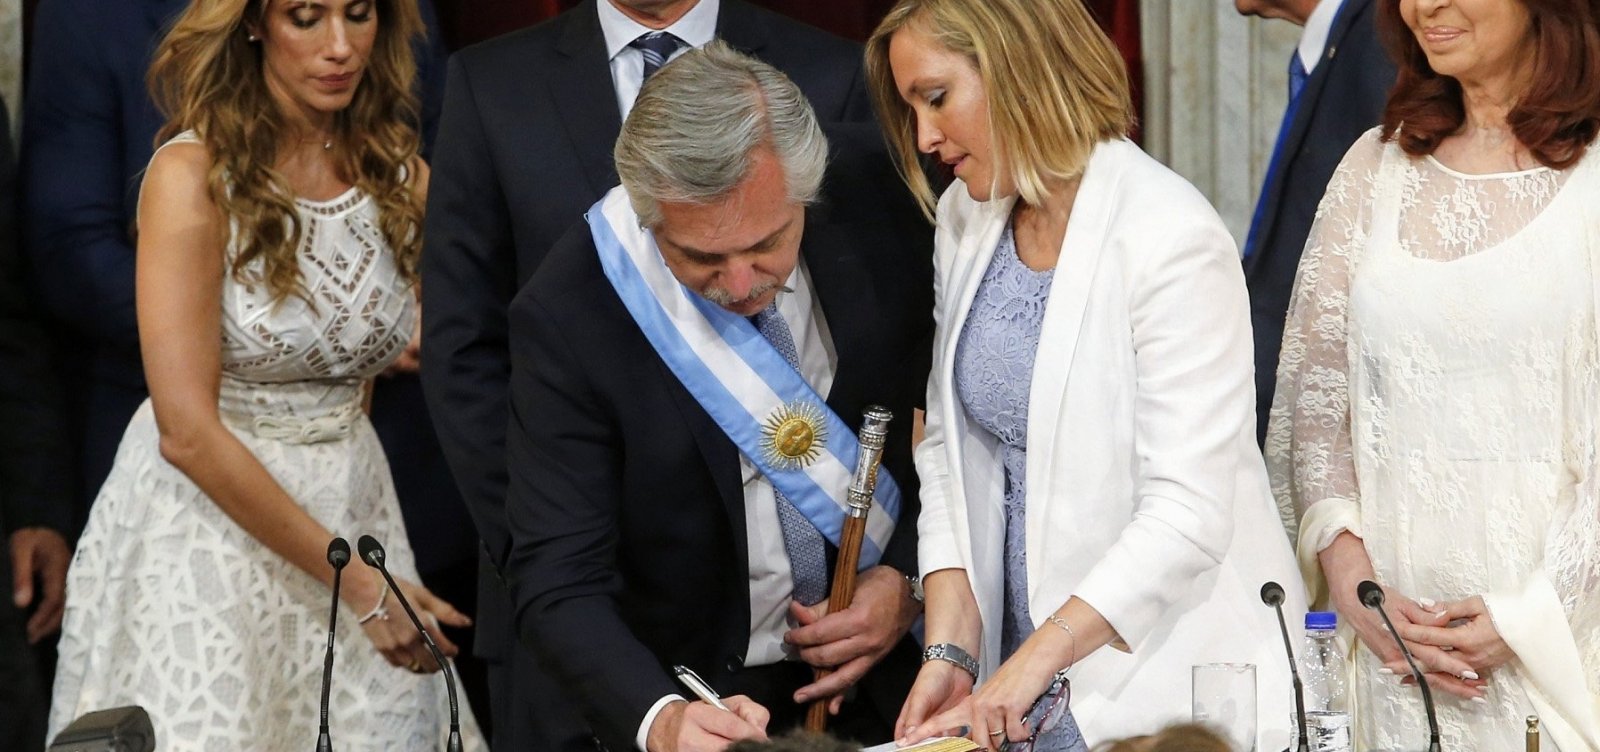 Alberto Fernández assume a presidência da Argentina